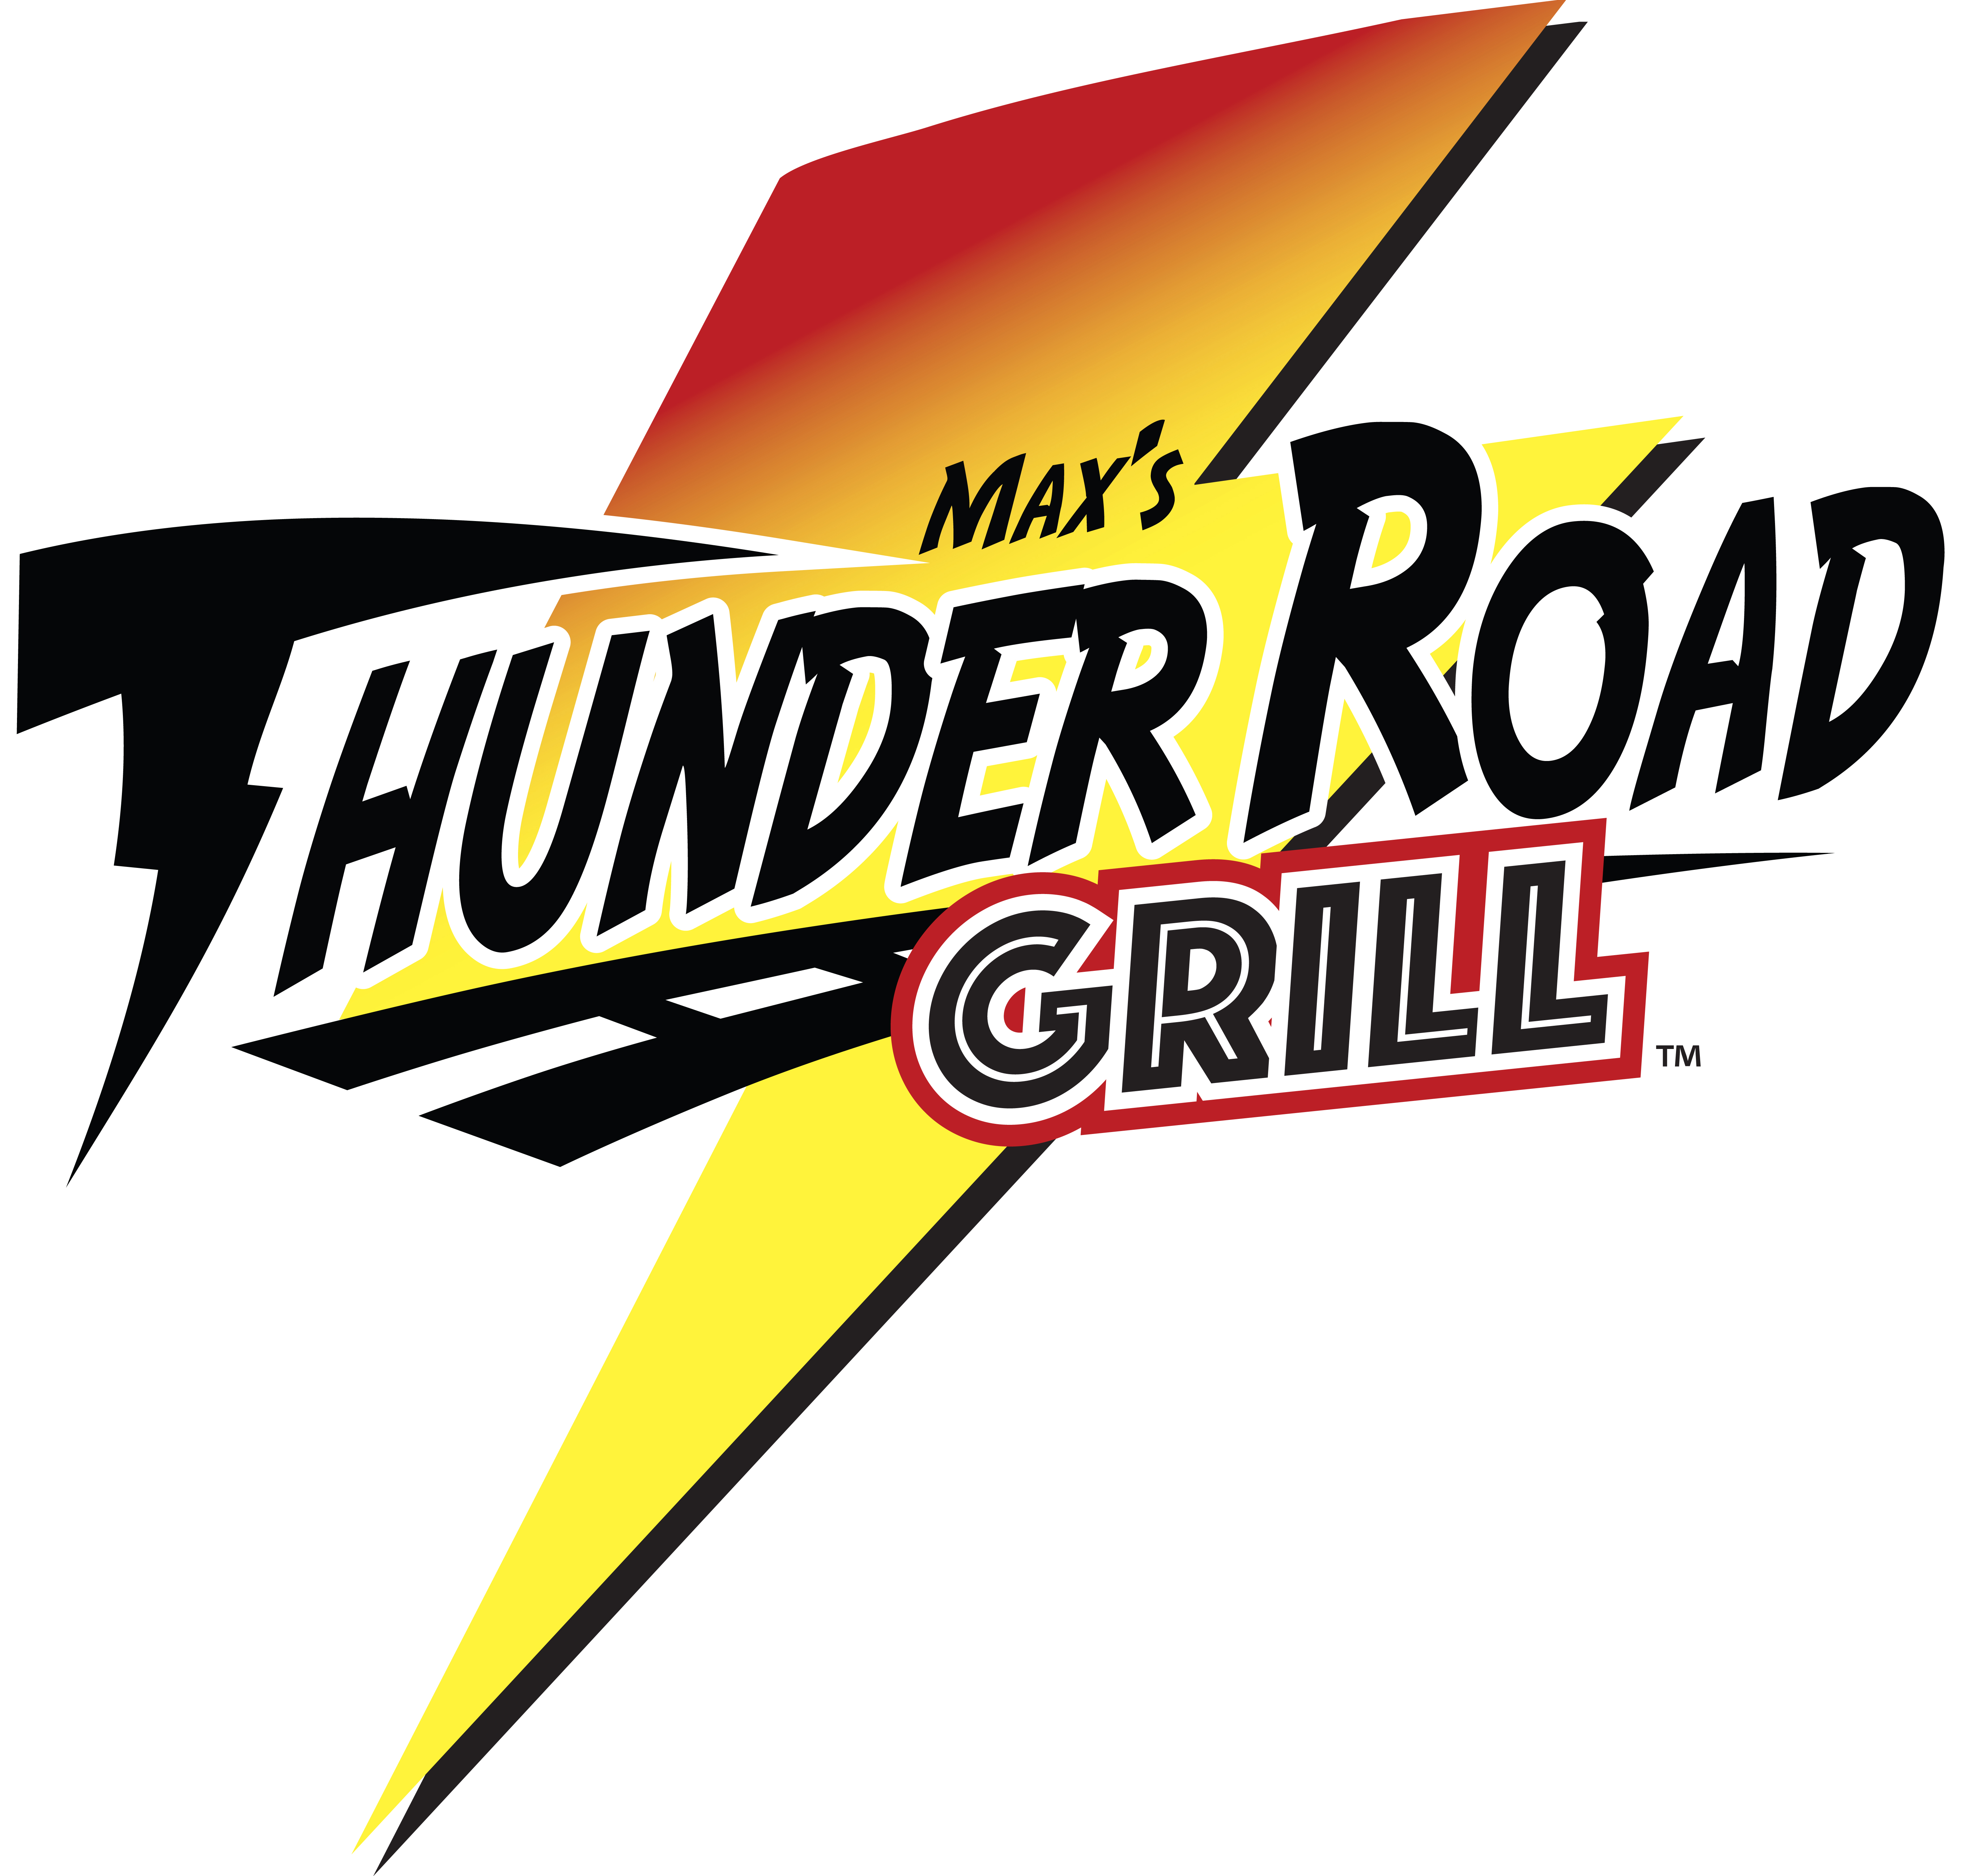 Max's Thunder Road Grill